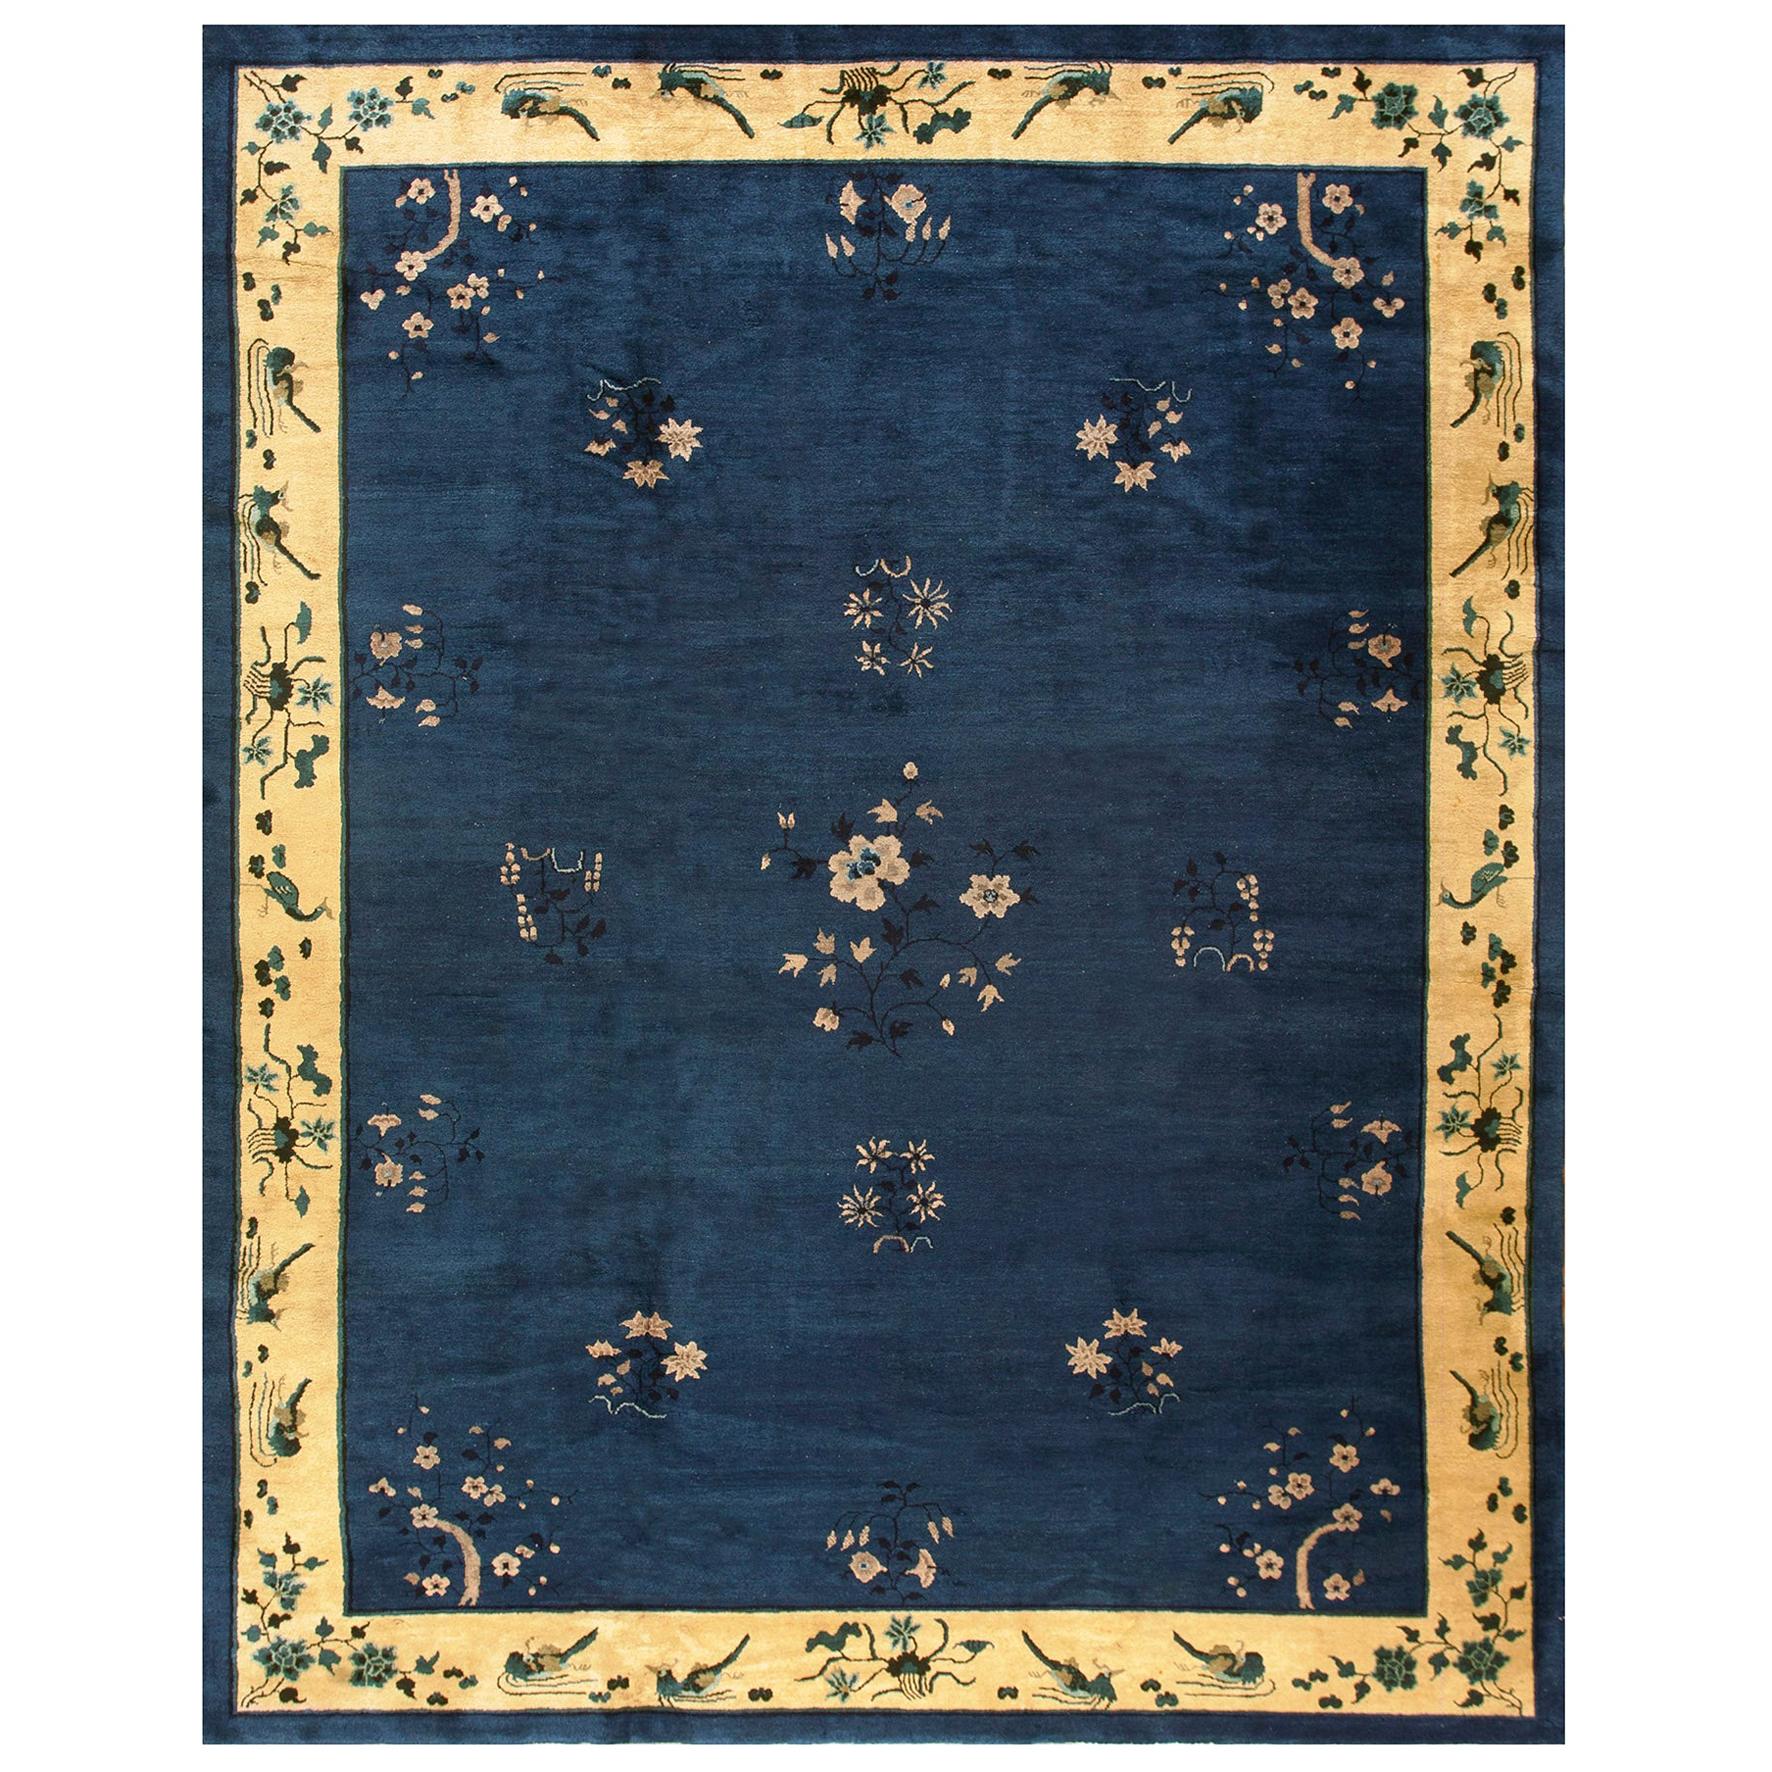 Early 20th Century Chinese Peking Carpet ( 9' x 11'4" - 275 x 345 )